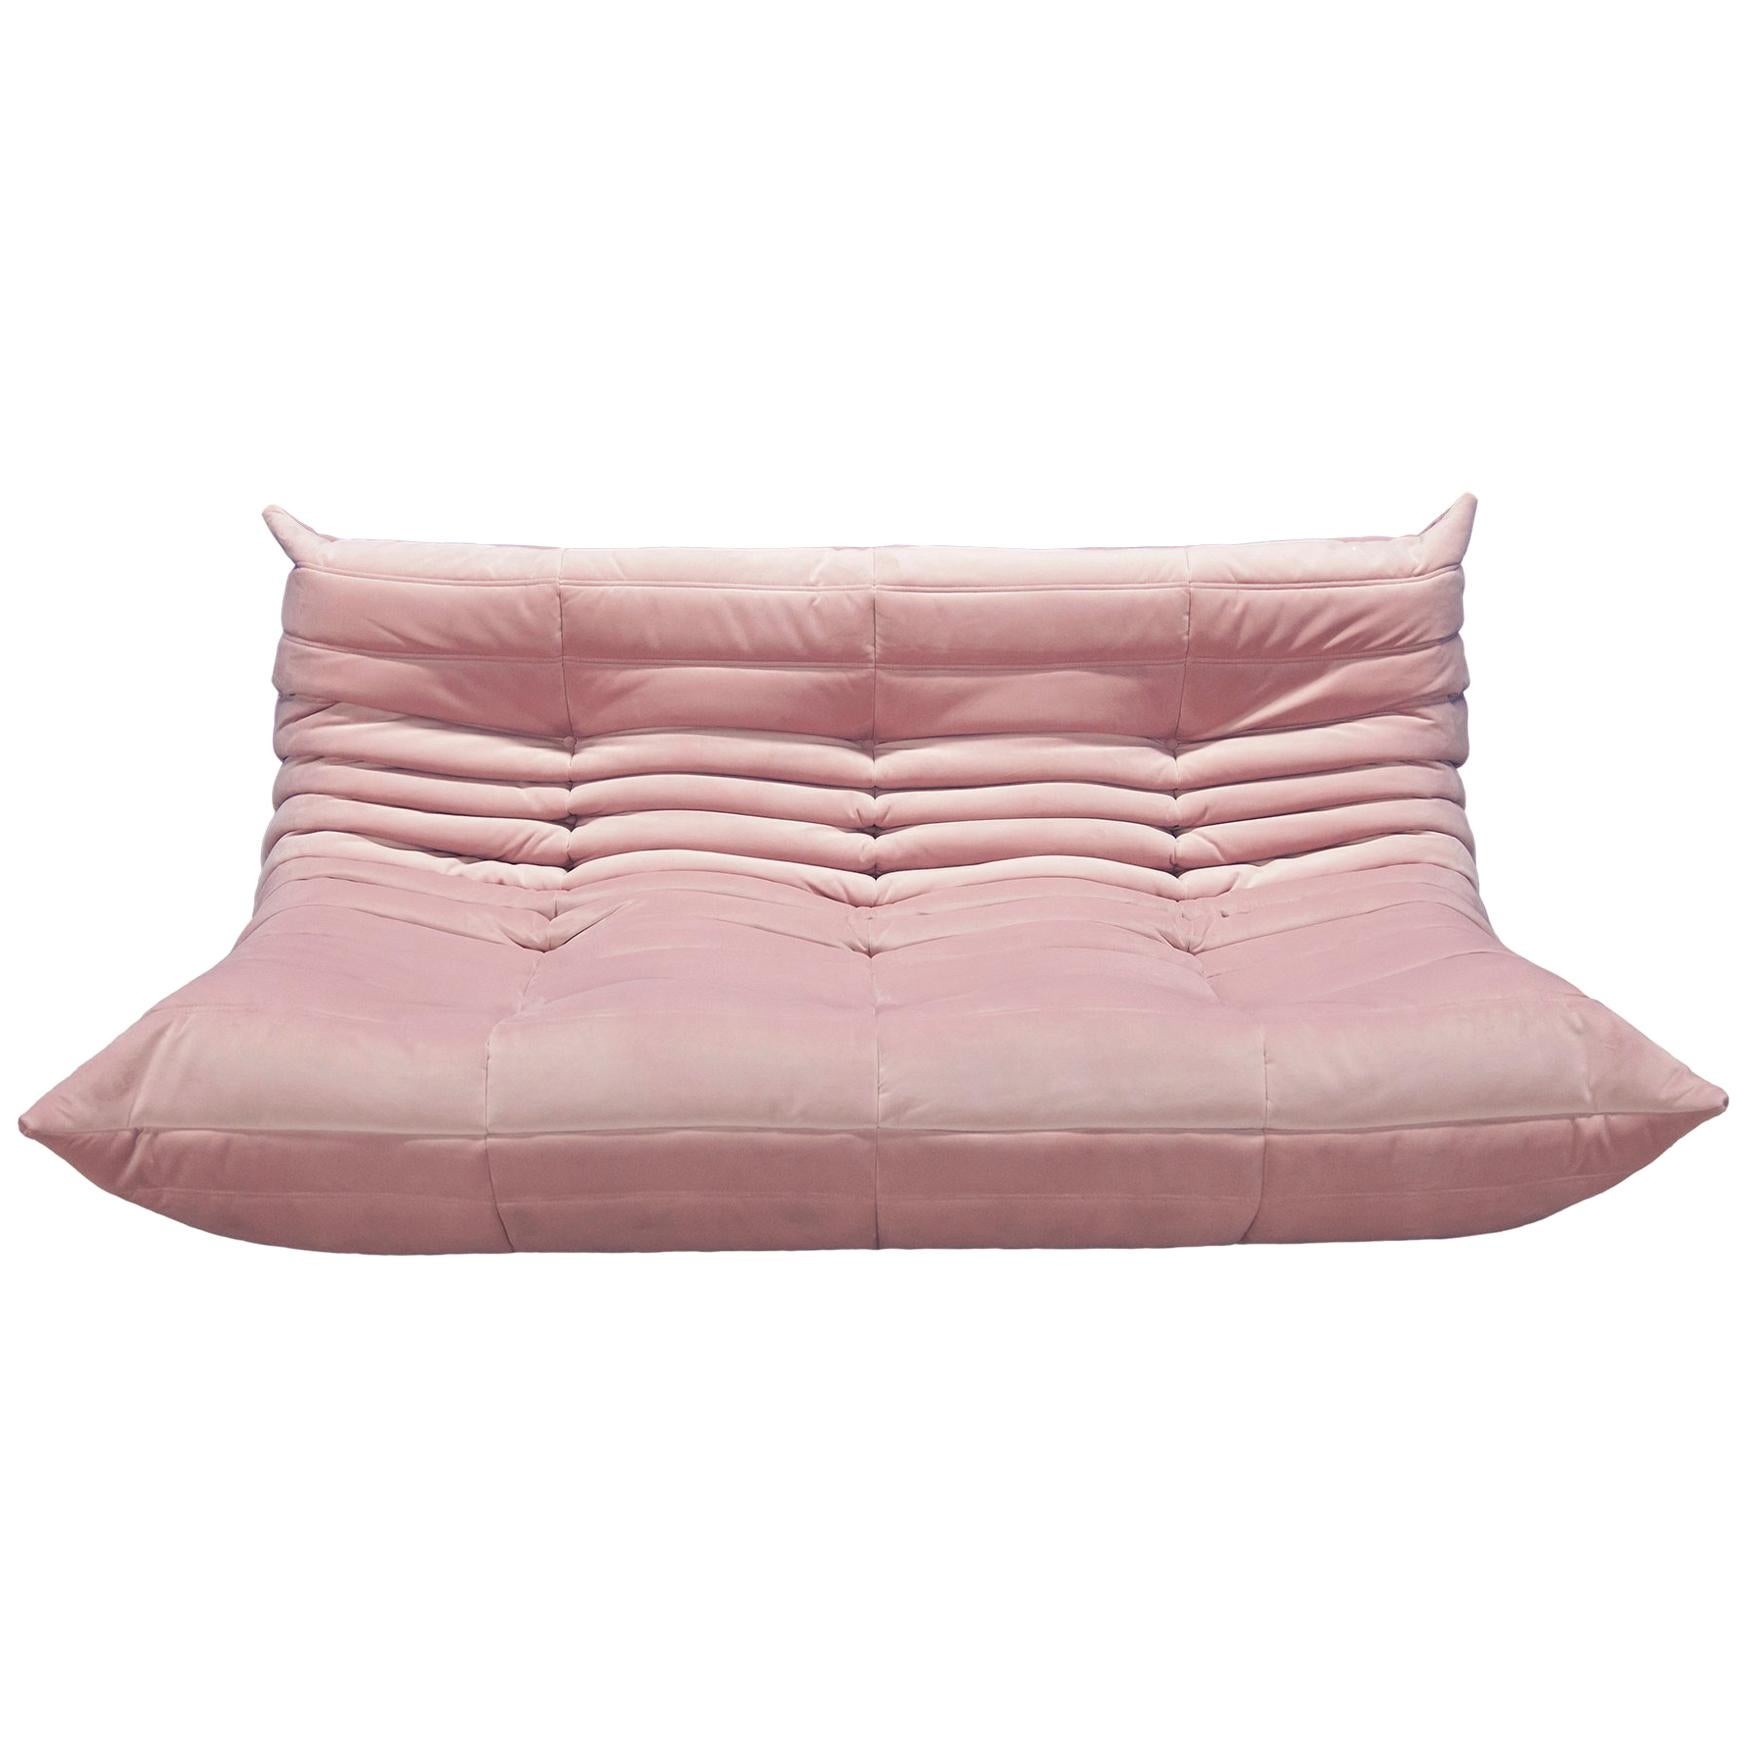 Togo 3-Seat Sofa in Pink Velvet by Michel Ducaroy for Ligne Roset For Sale